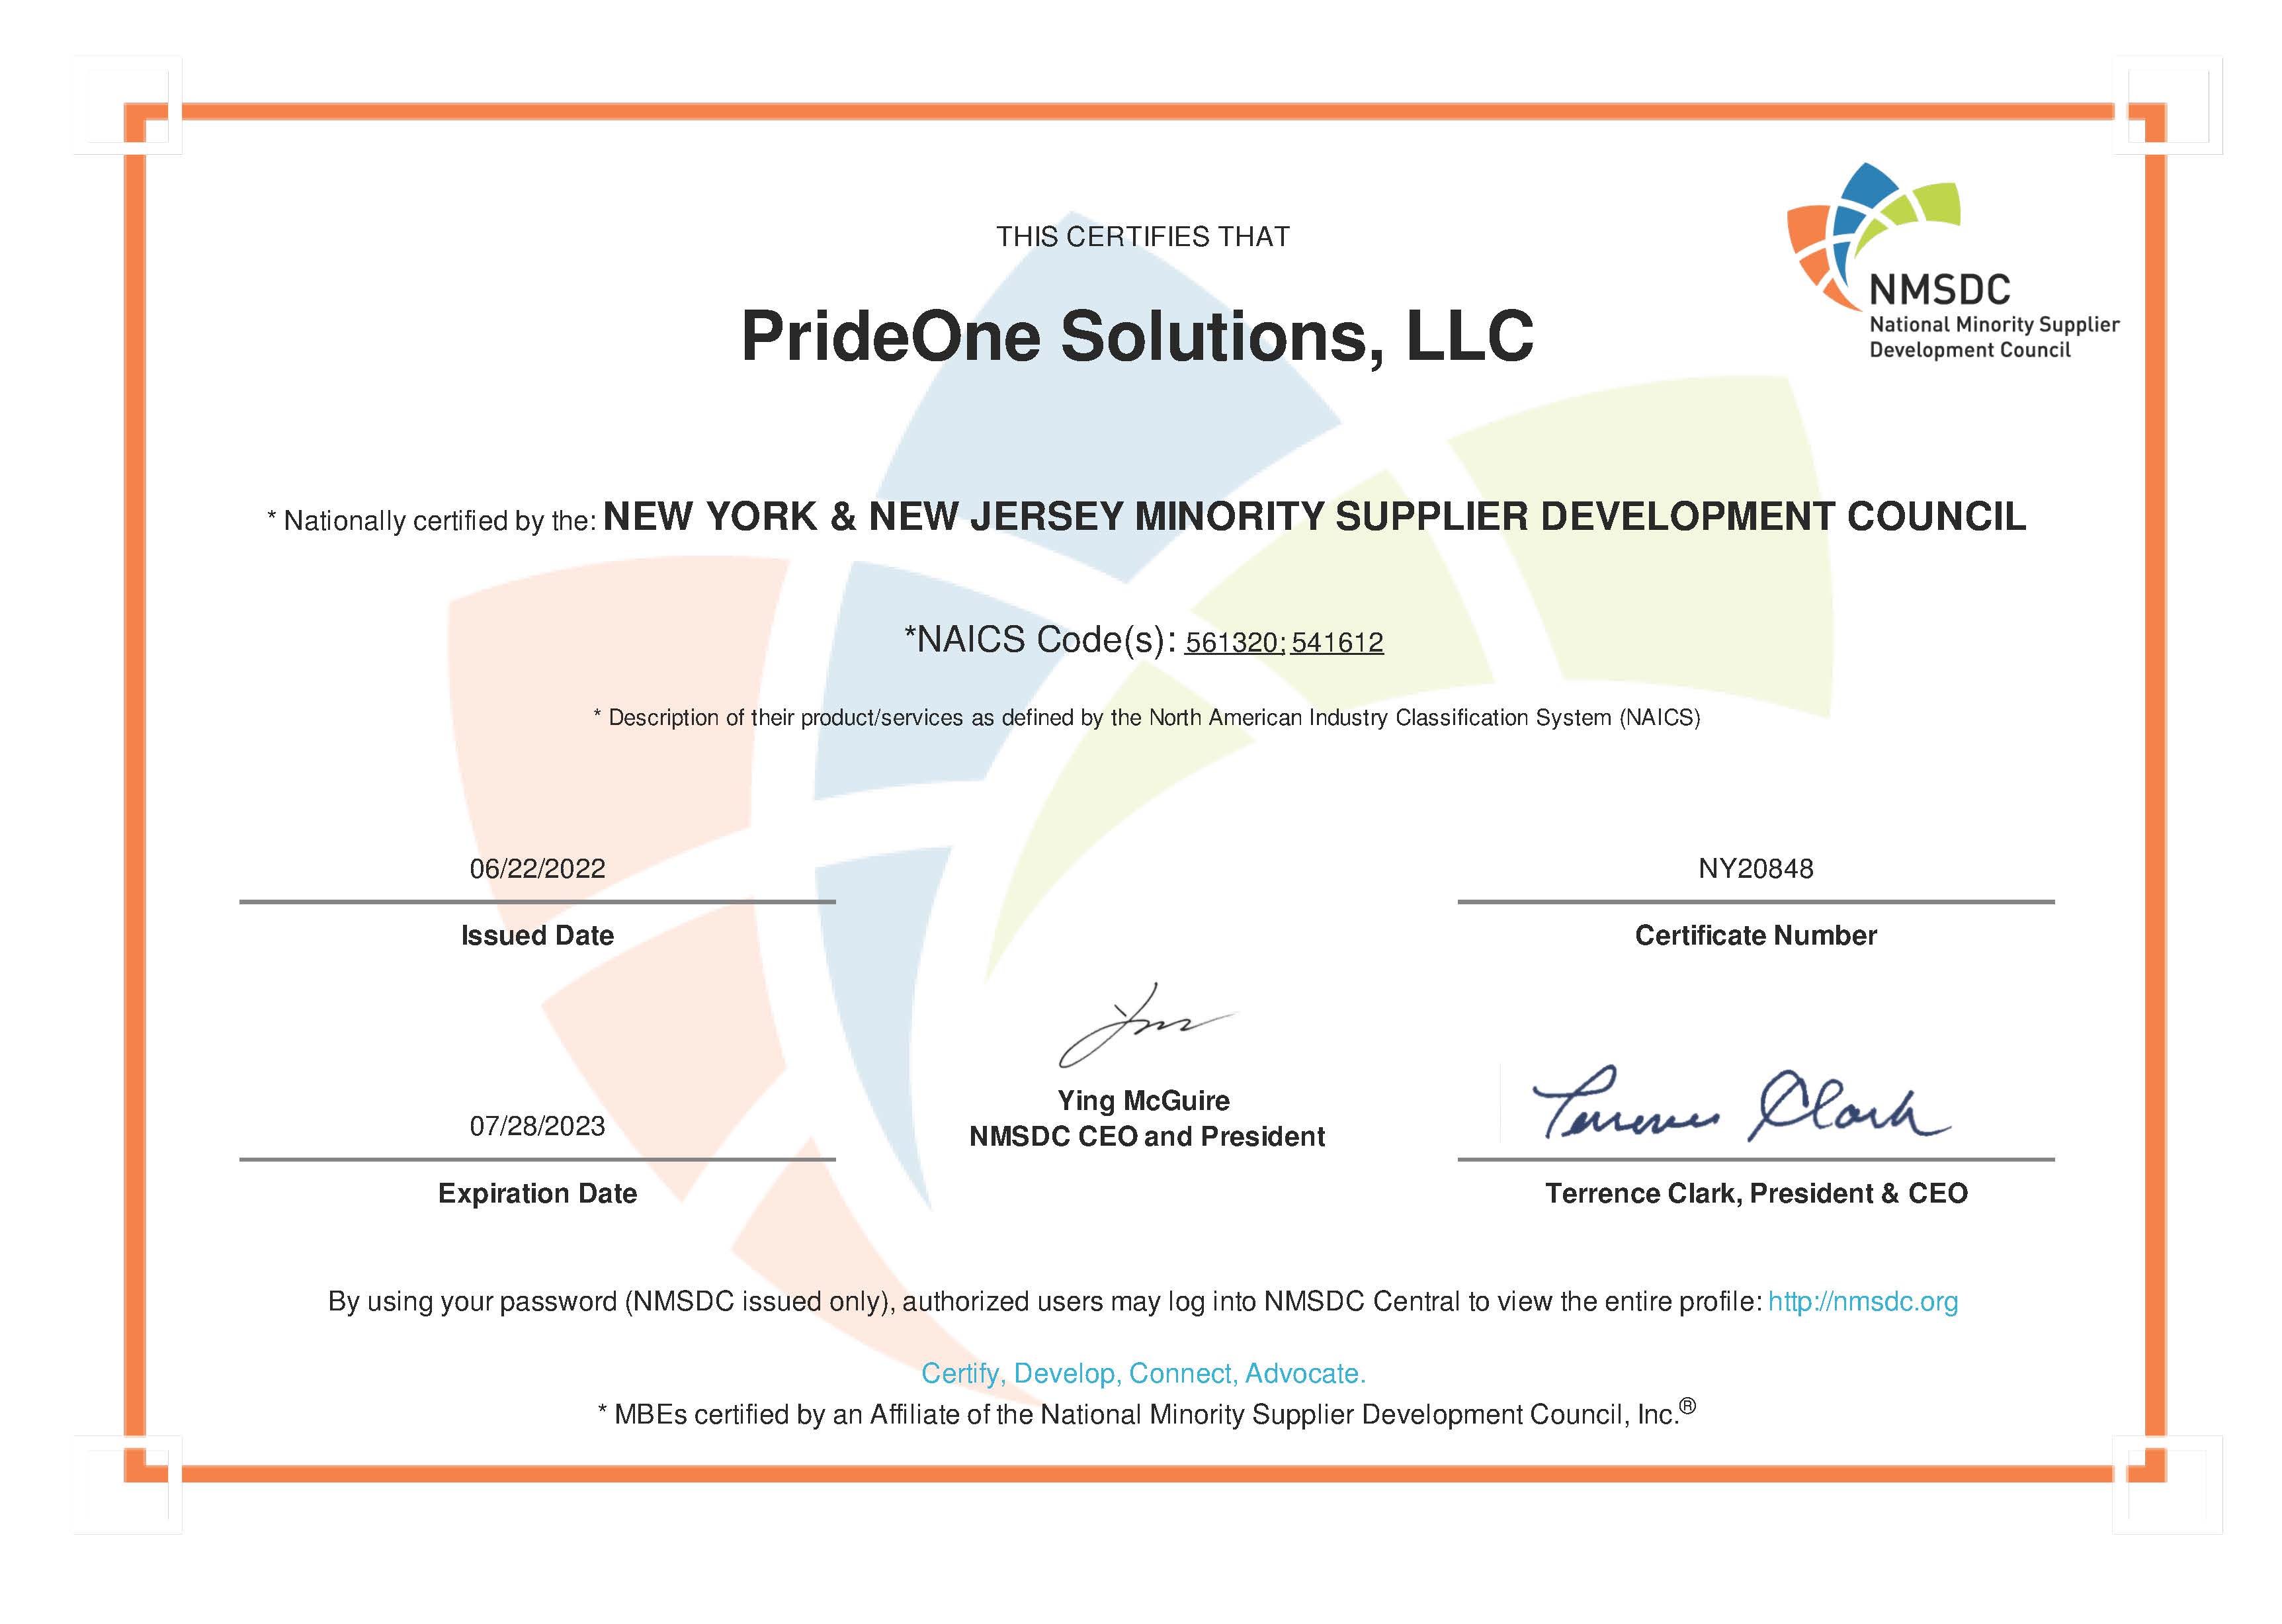 Certification of PrideOne